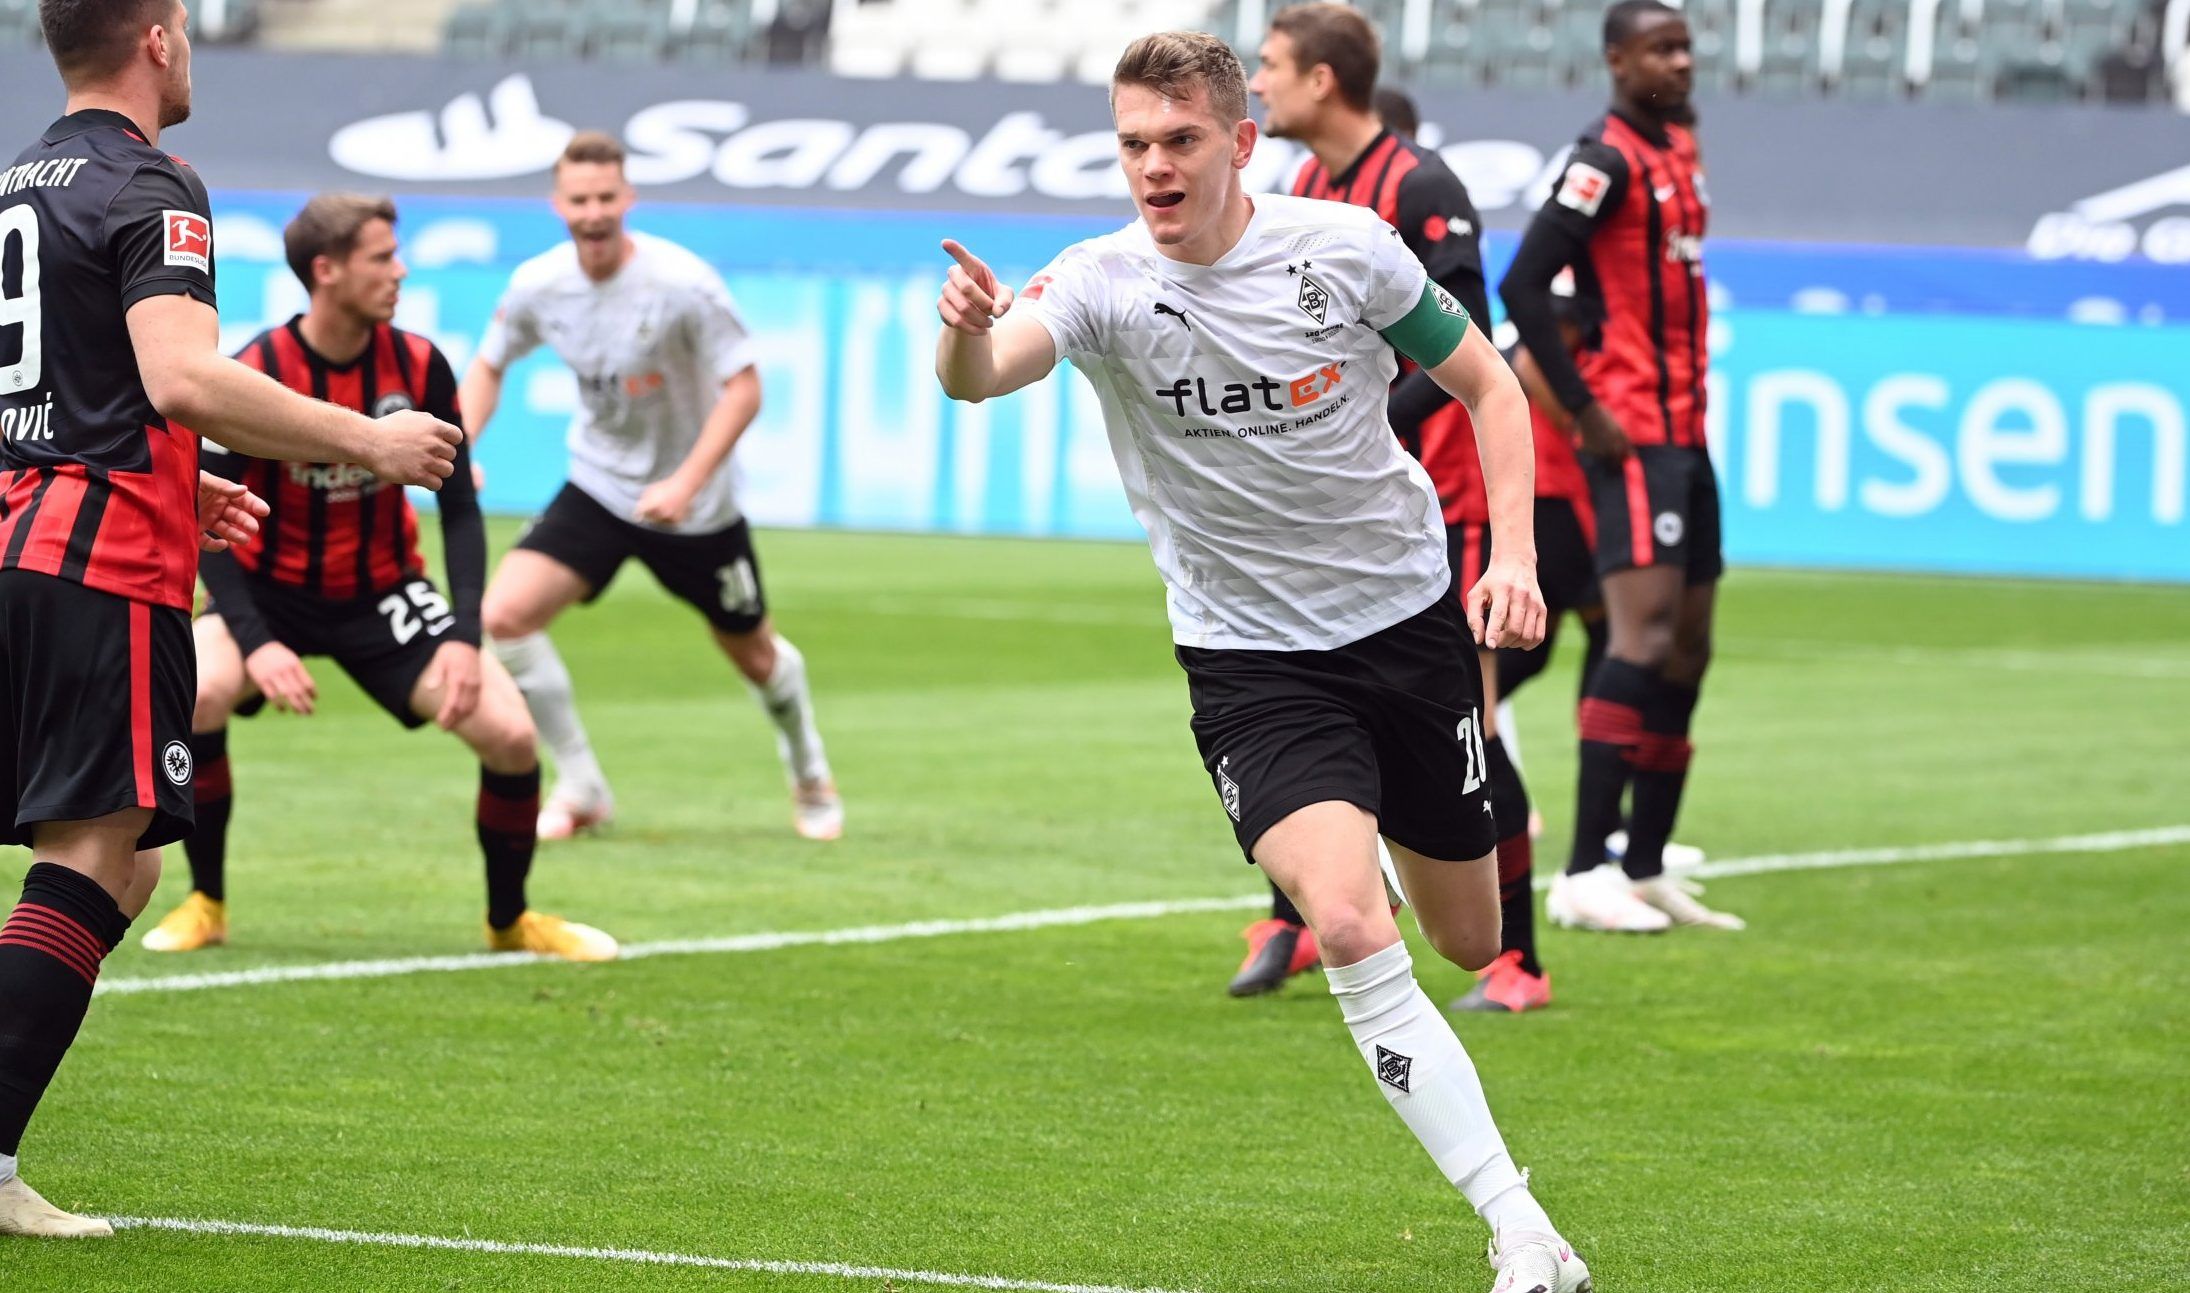 Borussia Monchengladbach defender Mathias Ginter celebrates scoring against Frankfurt in the Bundesliga